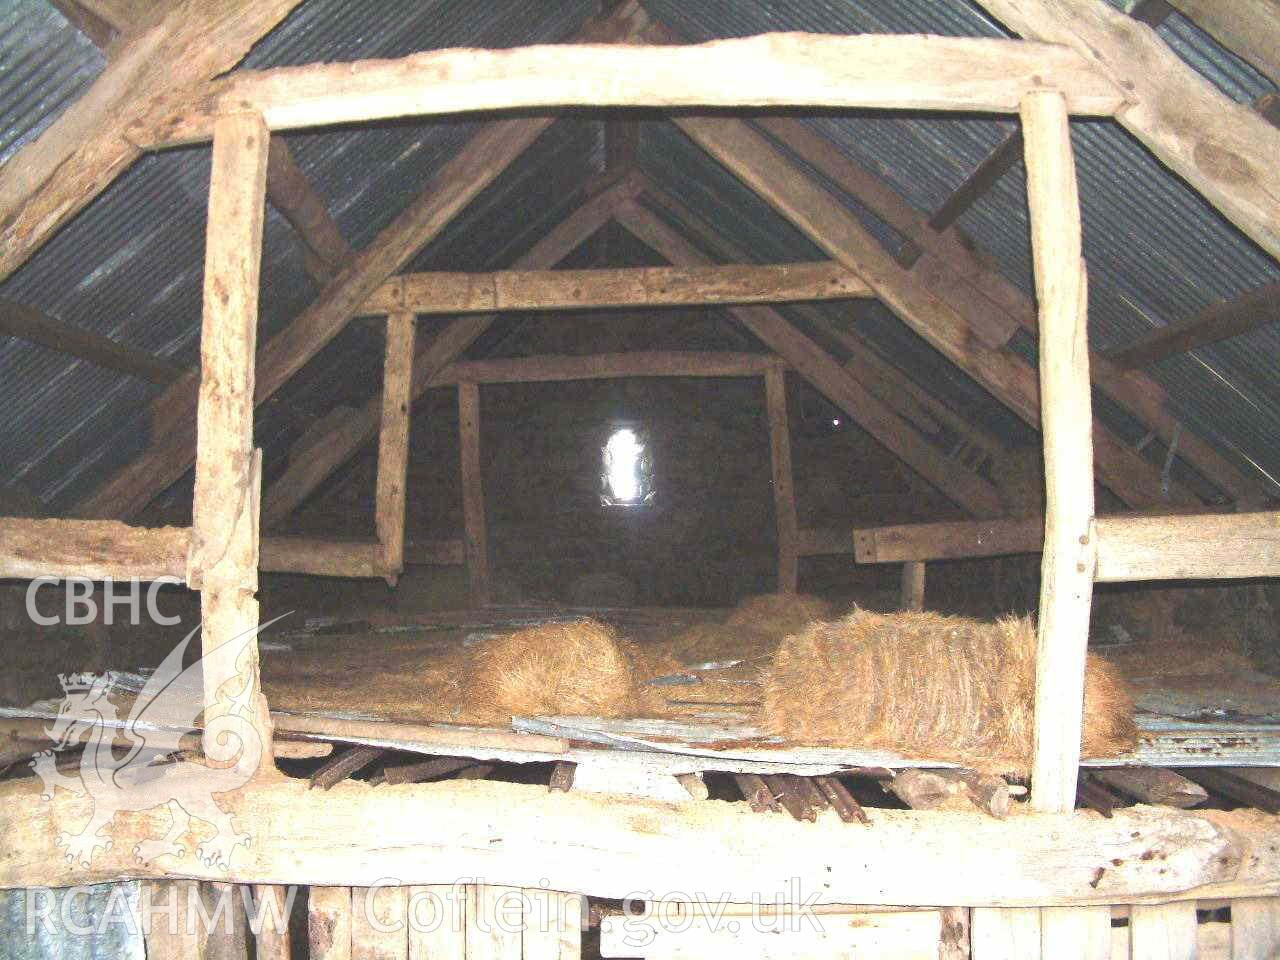 Photograph showing Egryn field barn interior, taken by John Latham, 2004.